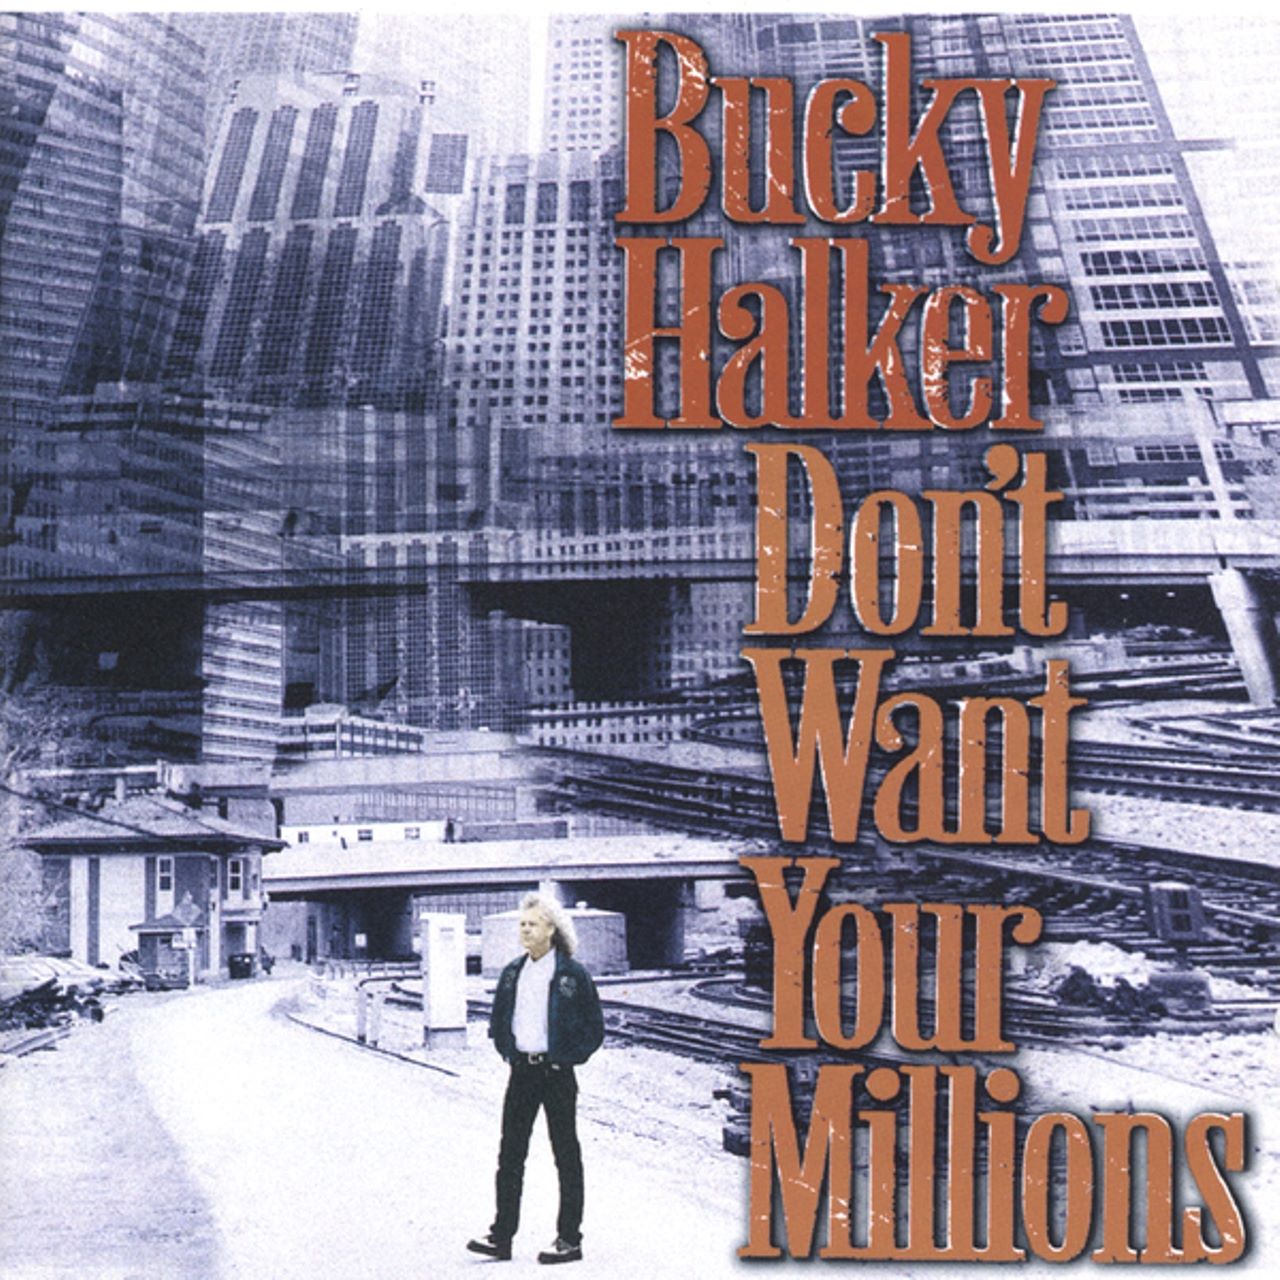 Bucky Halker - Don't Want Your Millions cover album